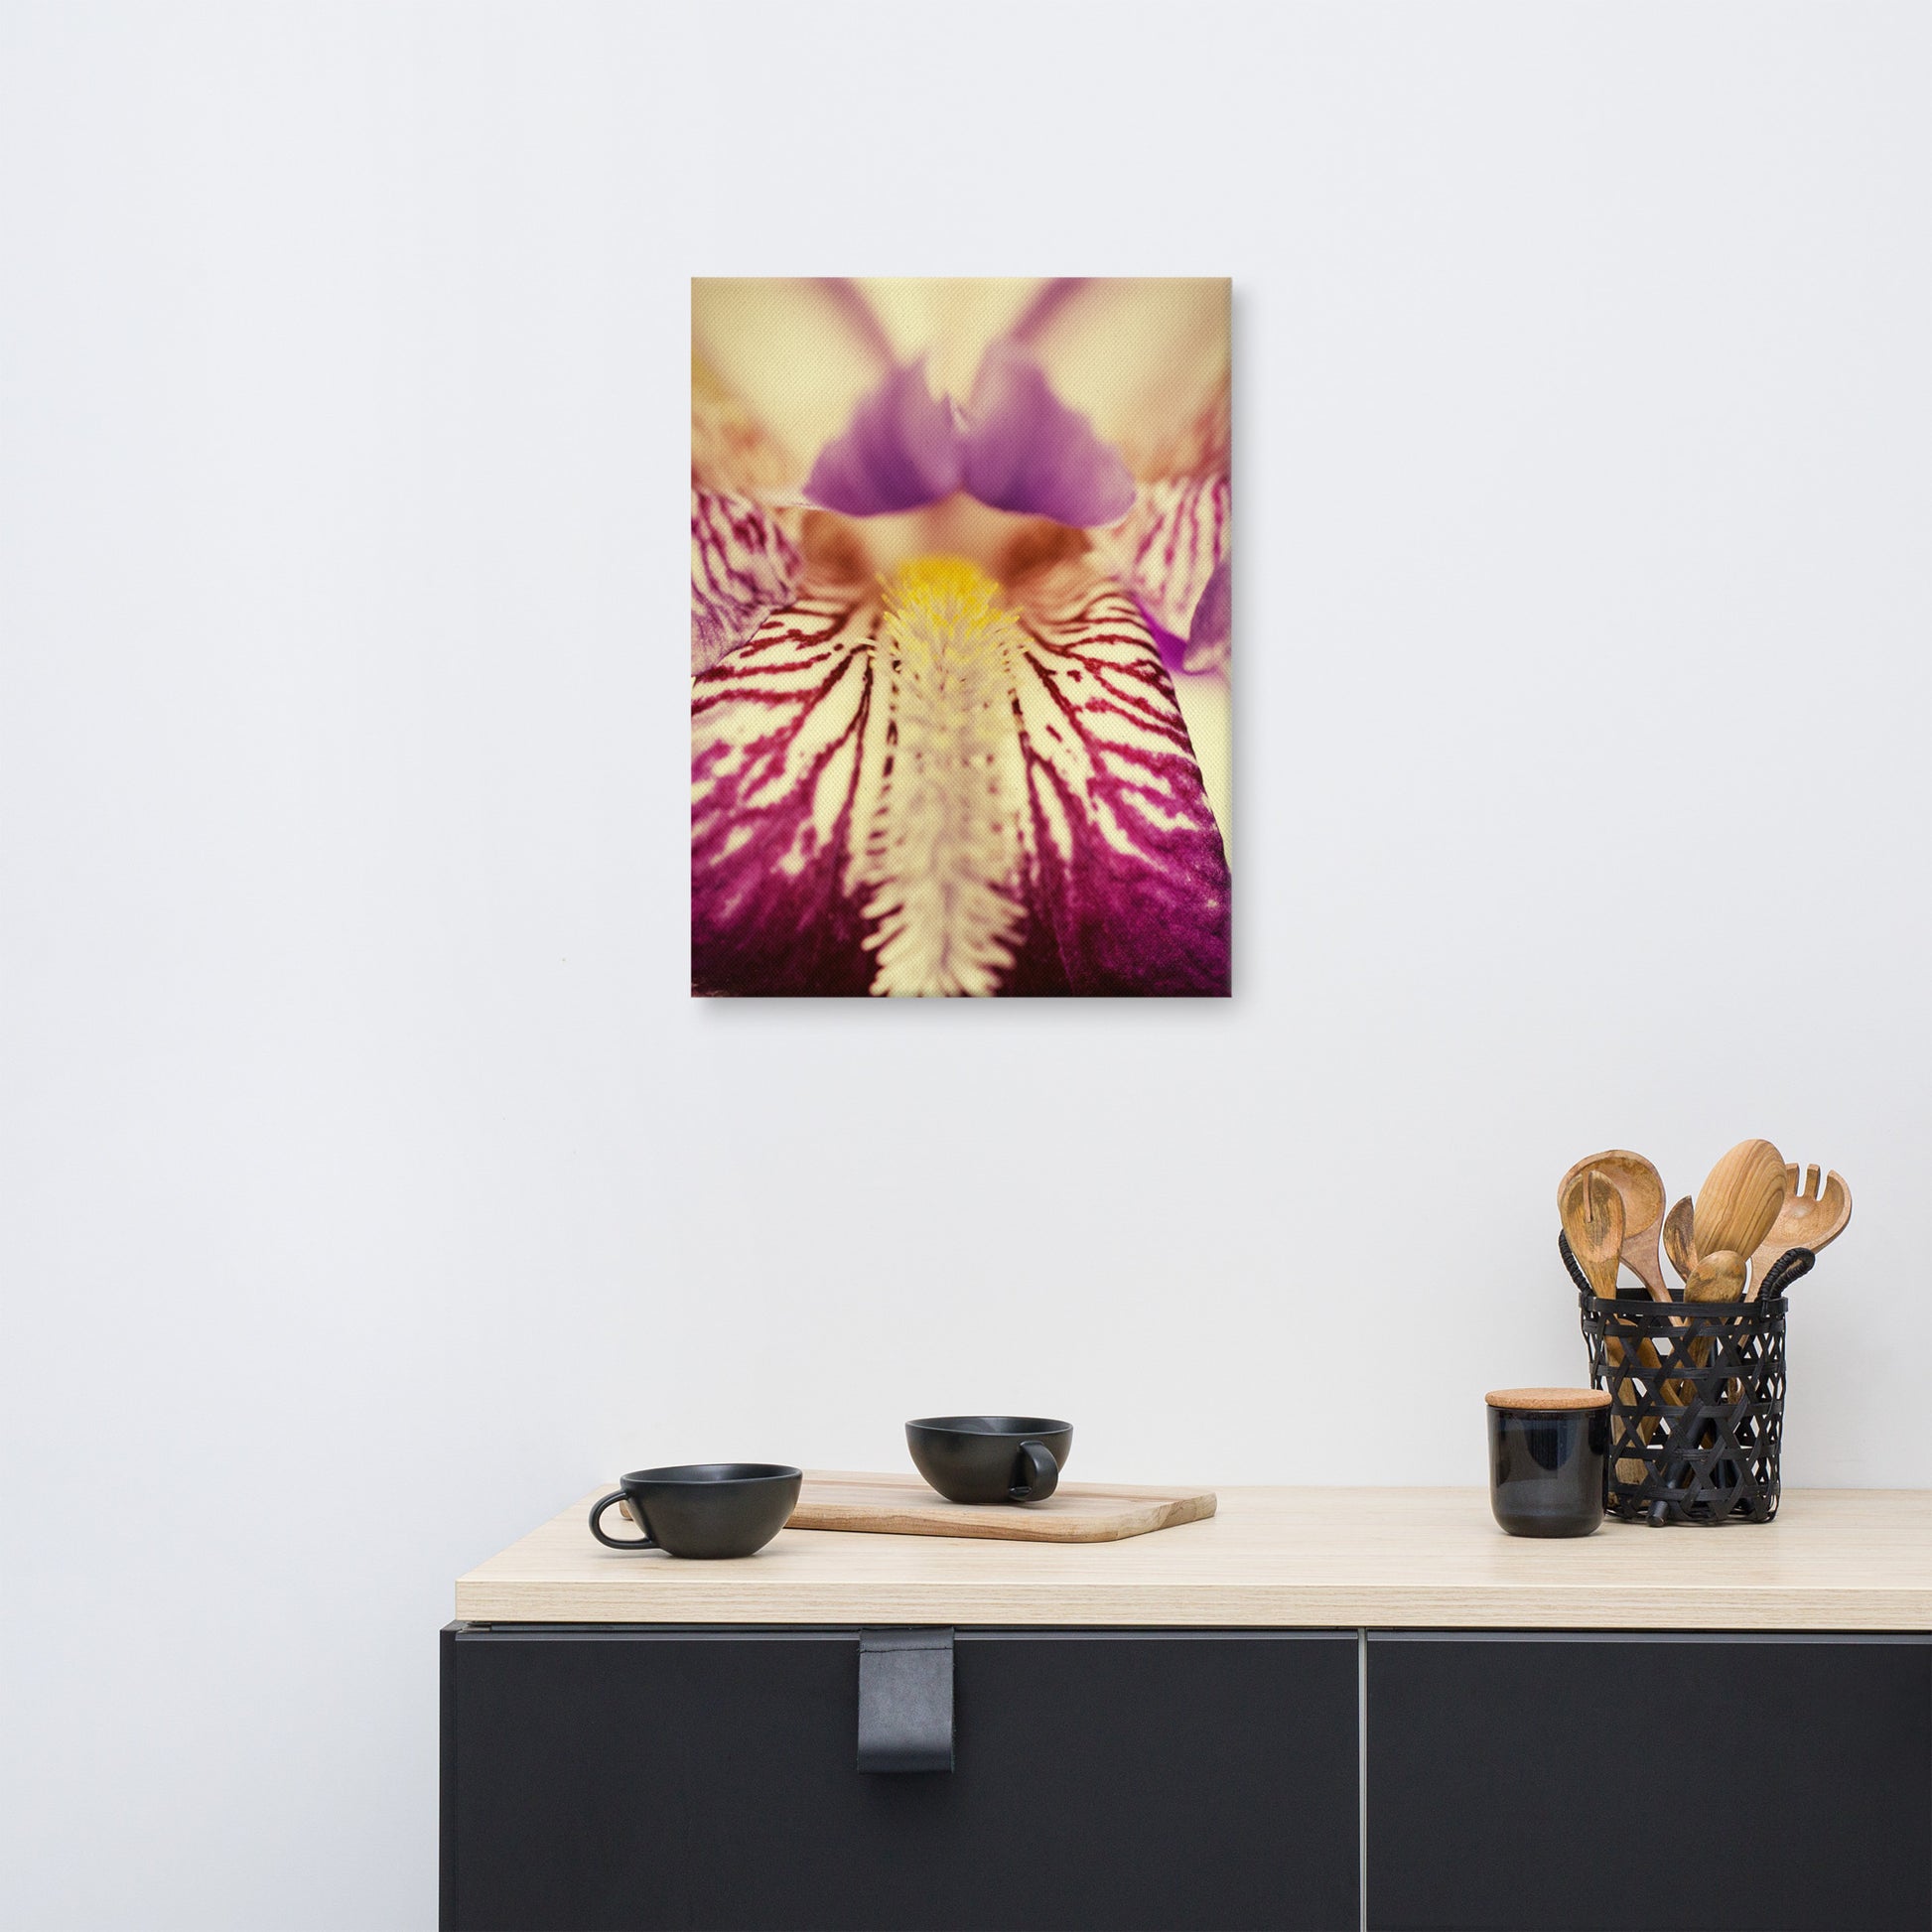 Canvas Pictures Of Flowers: Antiqued Iris - Botanical / Floral / Flora / Flowers / Nature Photograph Canvas Wall Art Print - Artwork